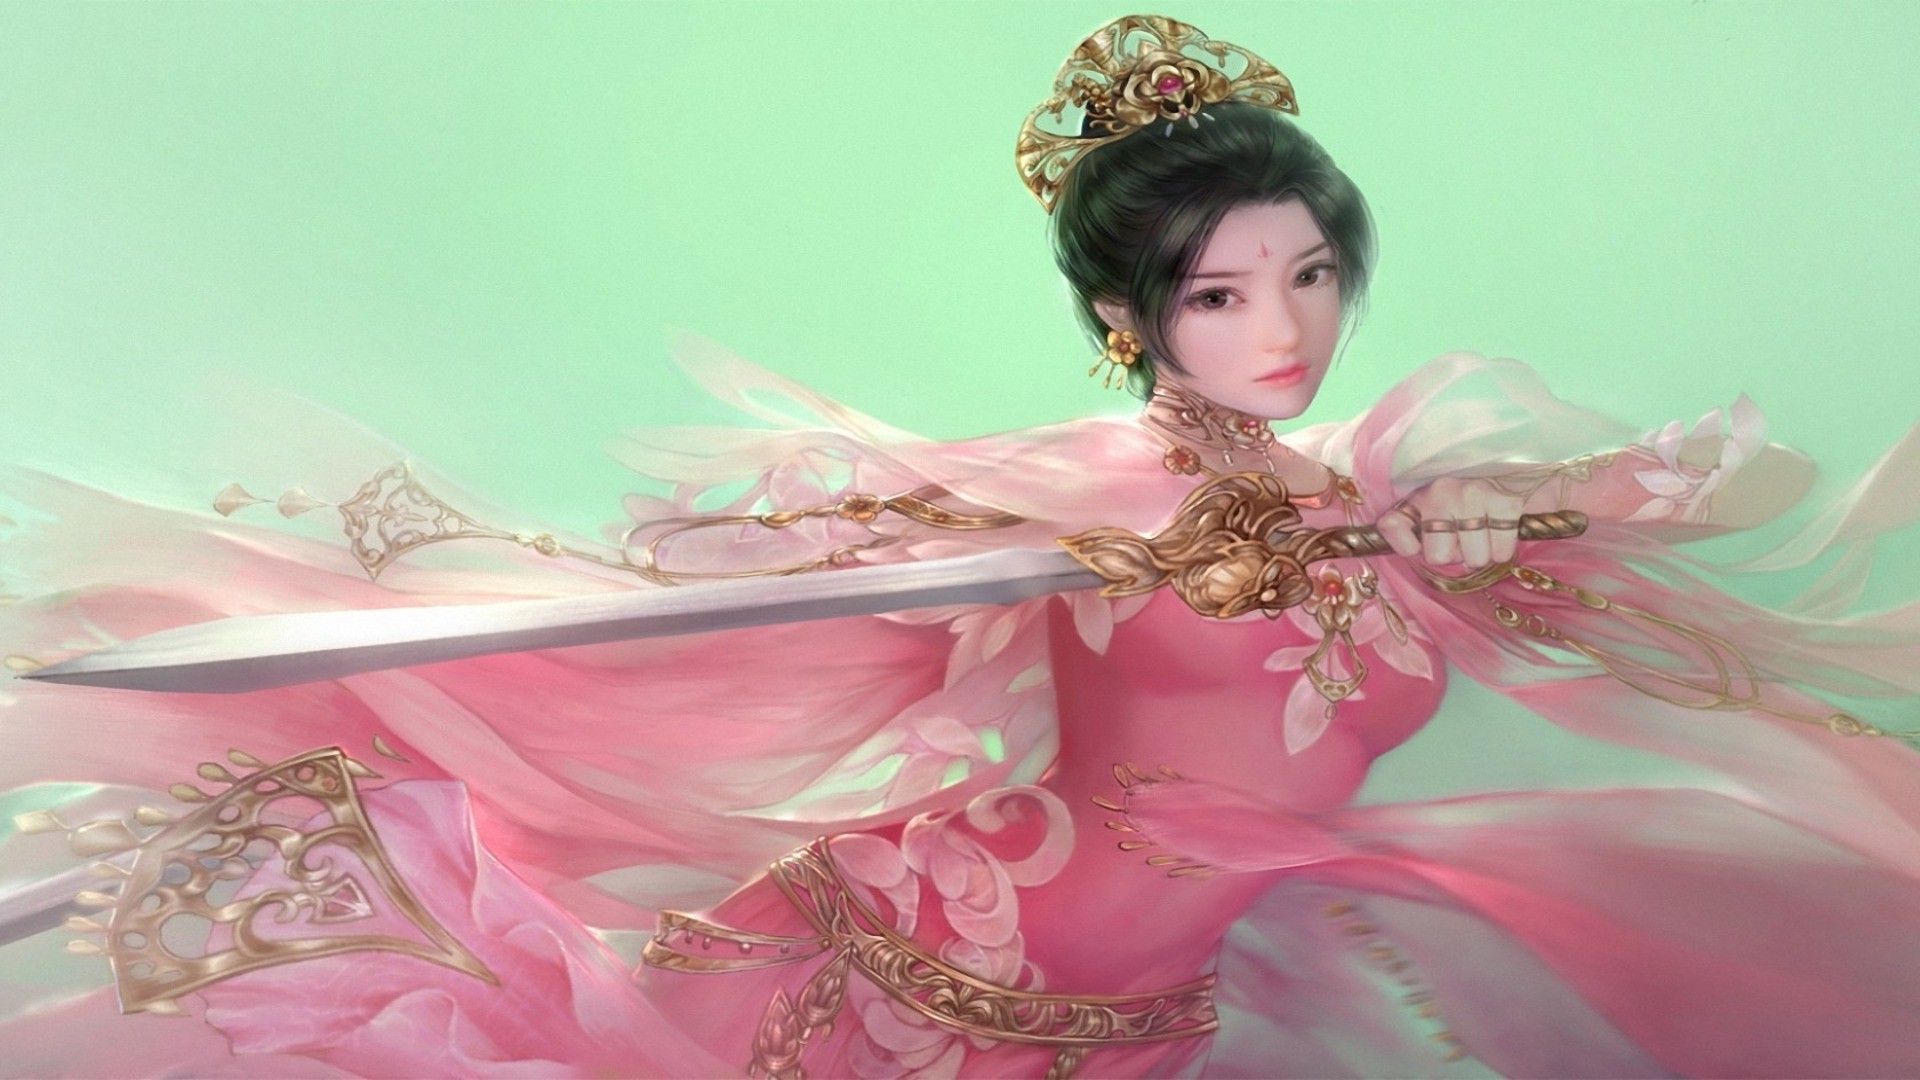 Japanese Princess with a sword